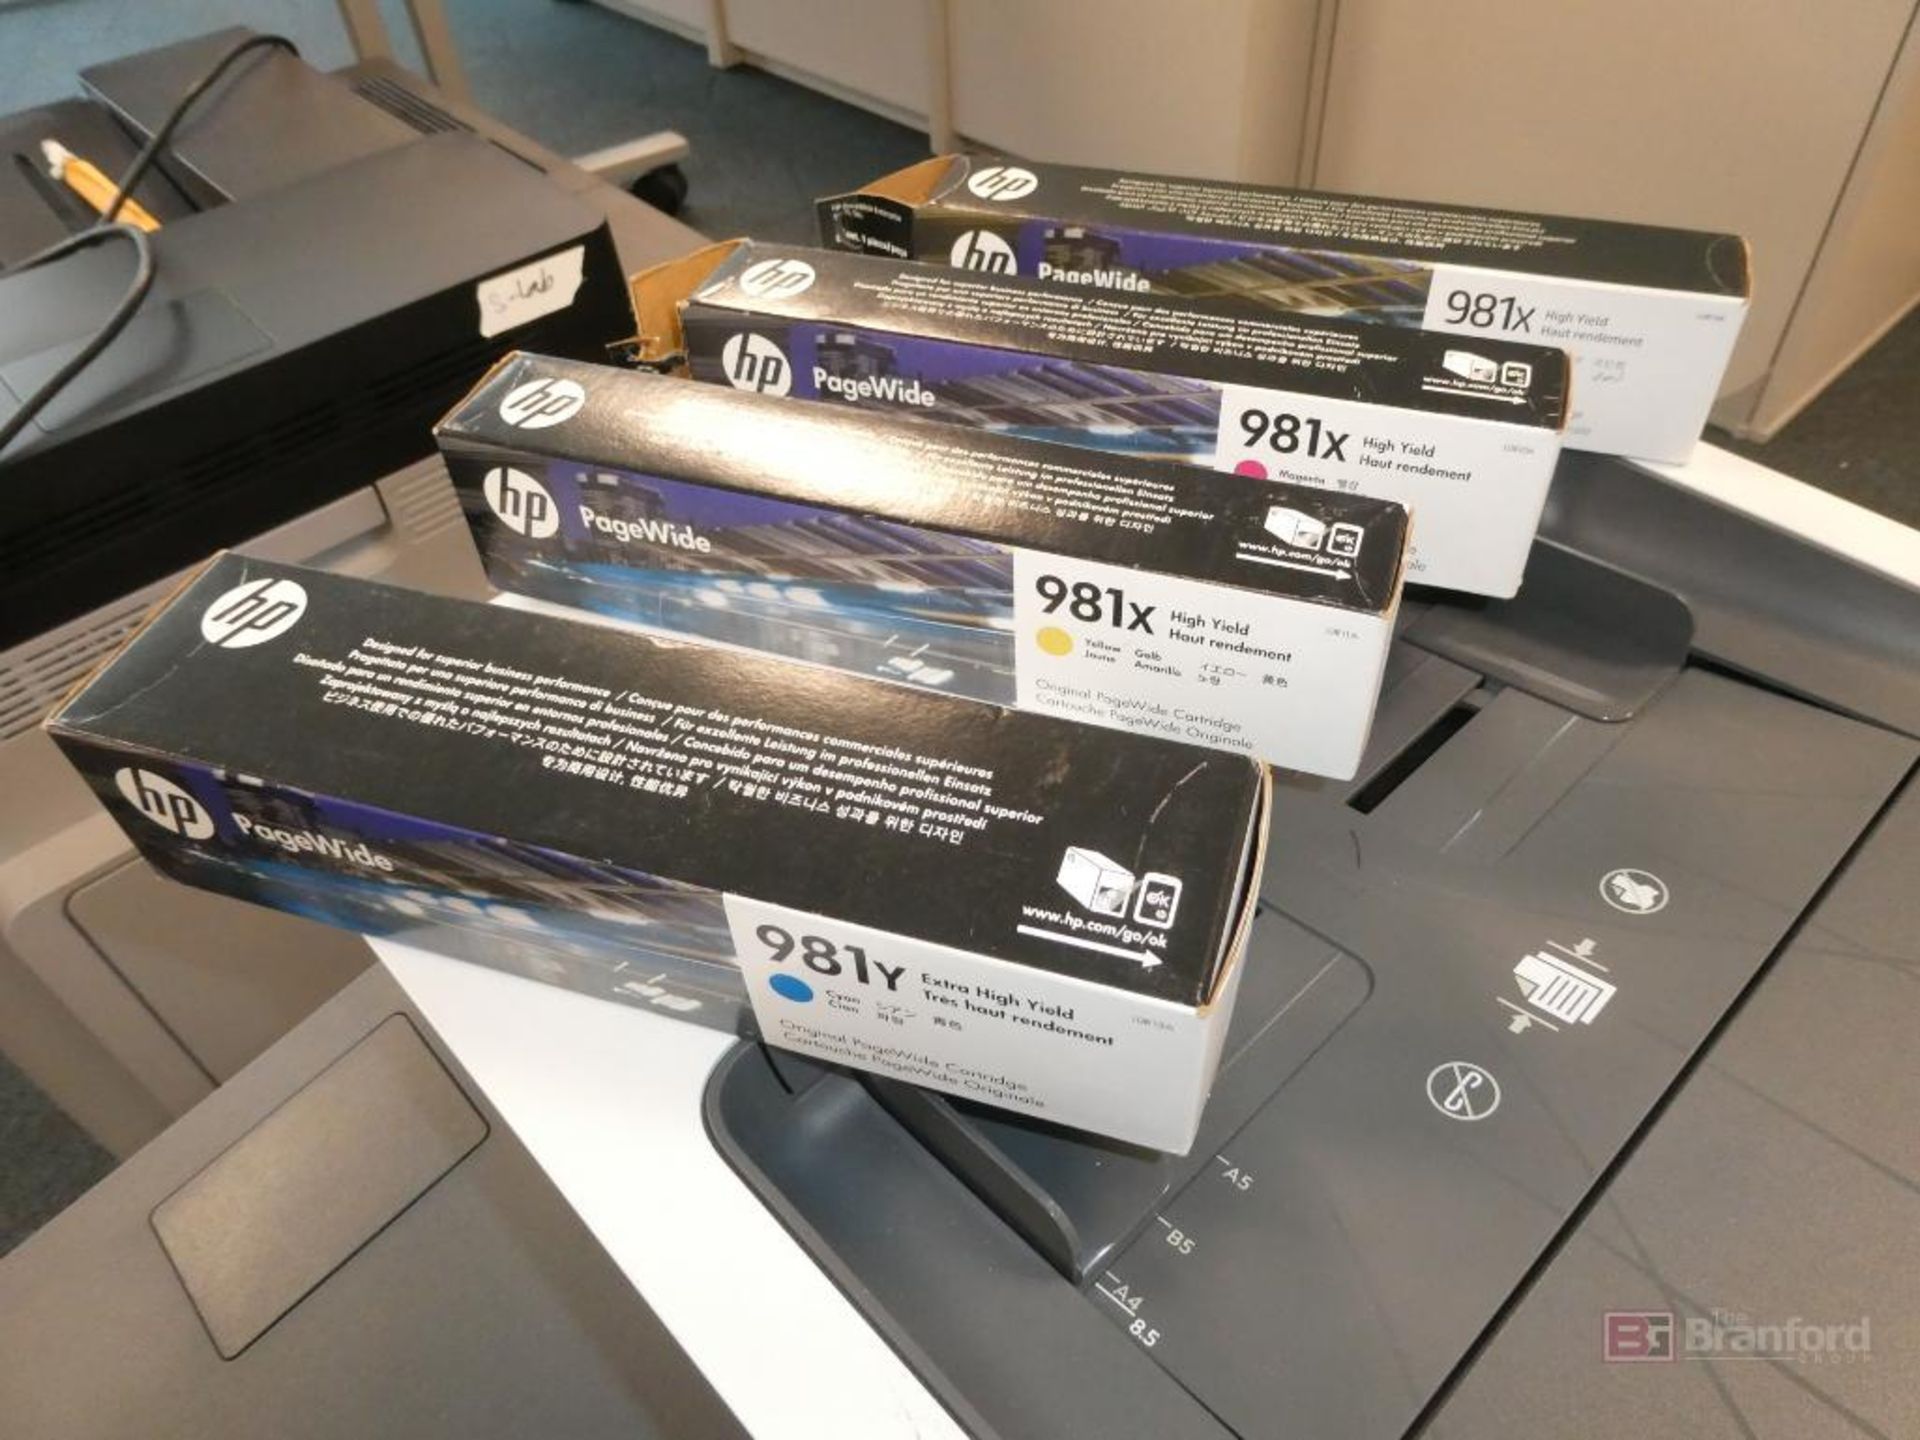 HP PageWide Enterprise MFP586, Color Printer/Scanner/Copy Machine - Image 4 of 4